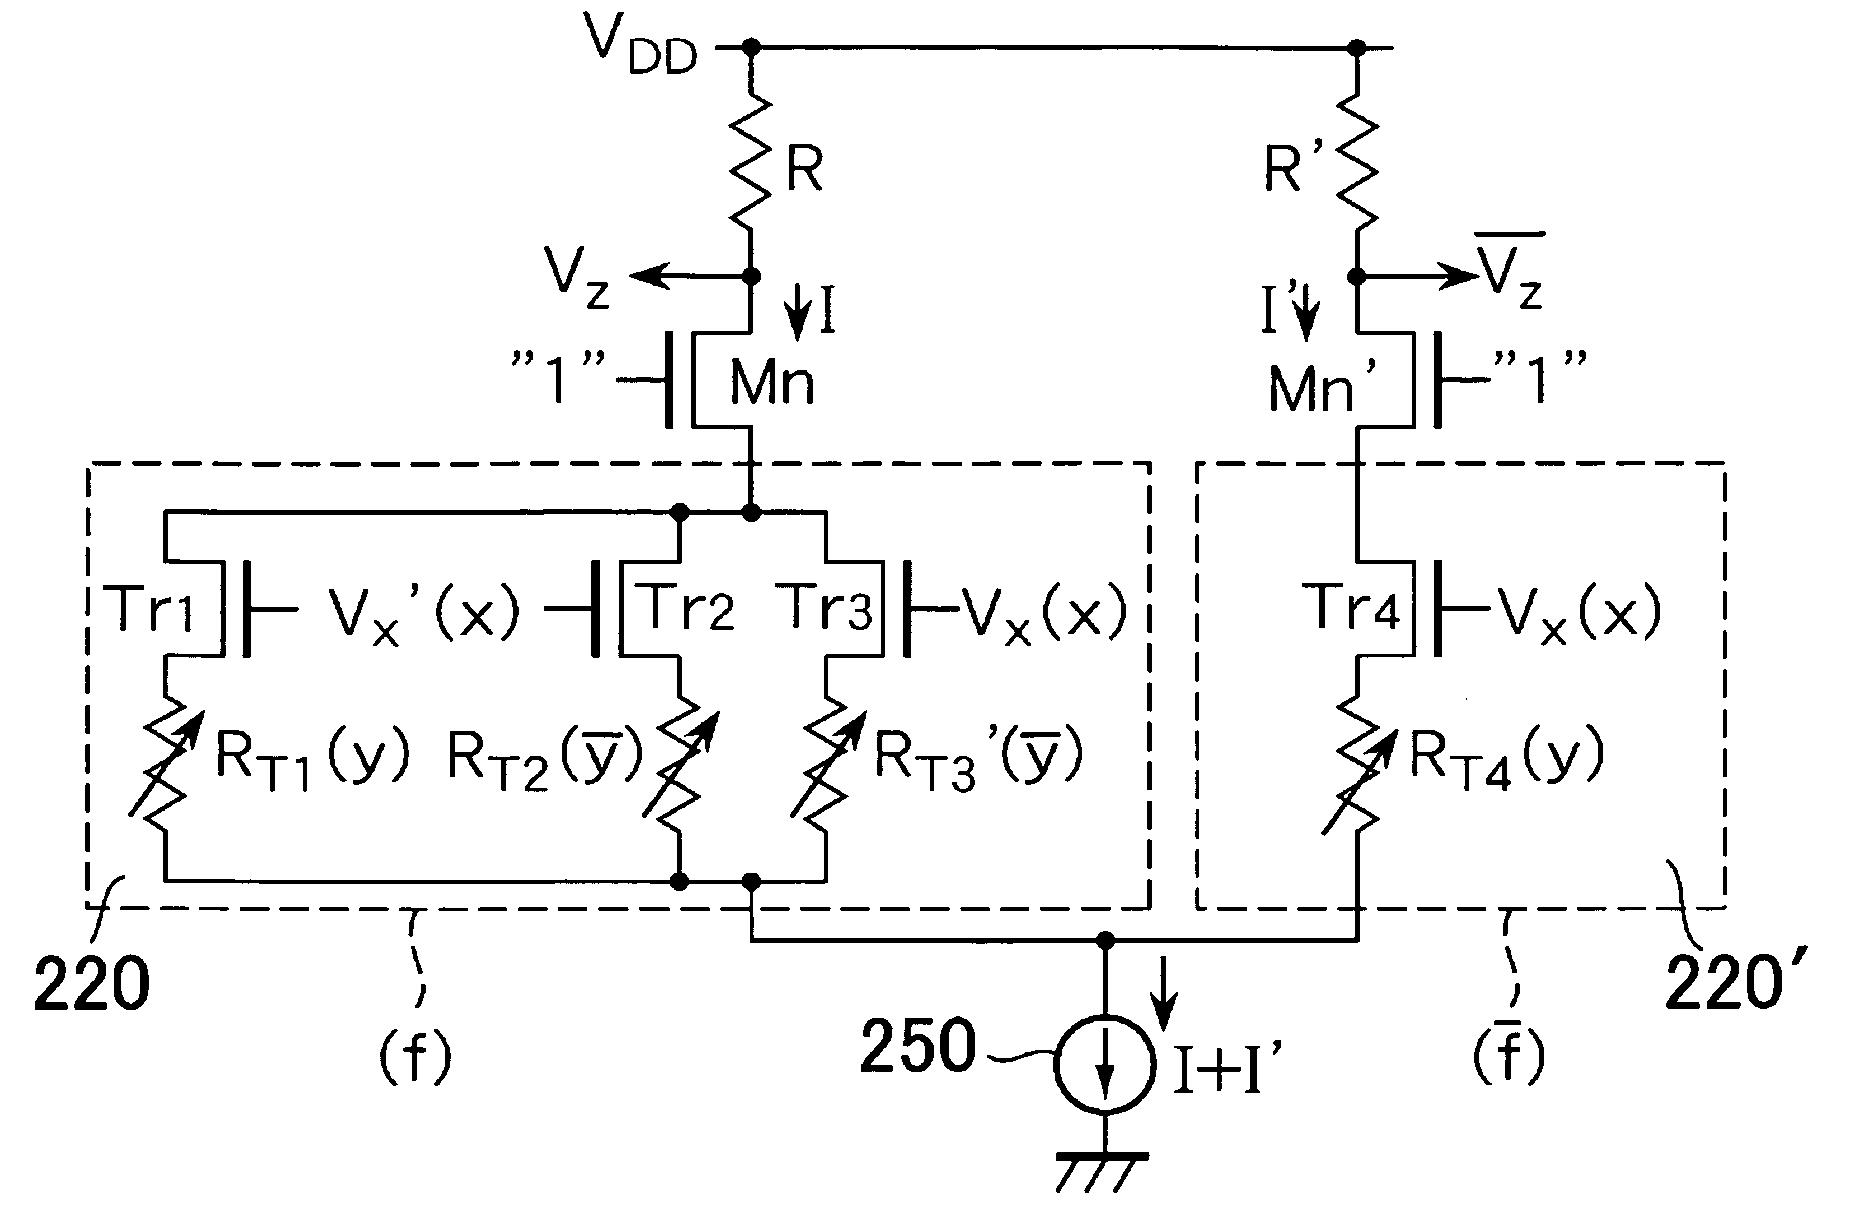 Logic-in-memory circuit using magnetoresistive element